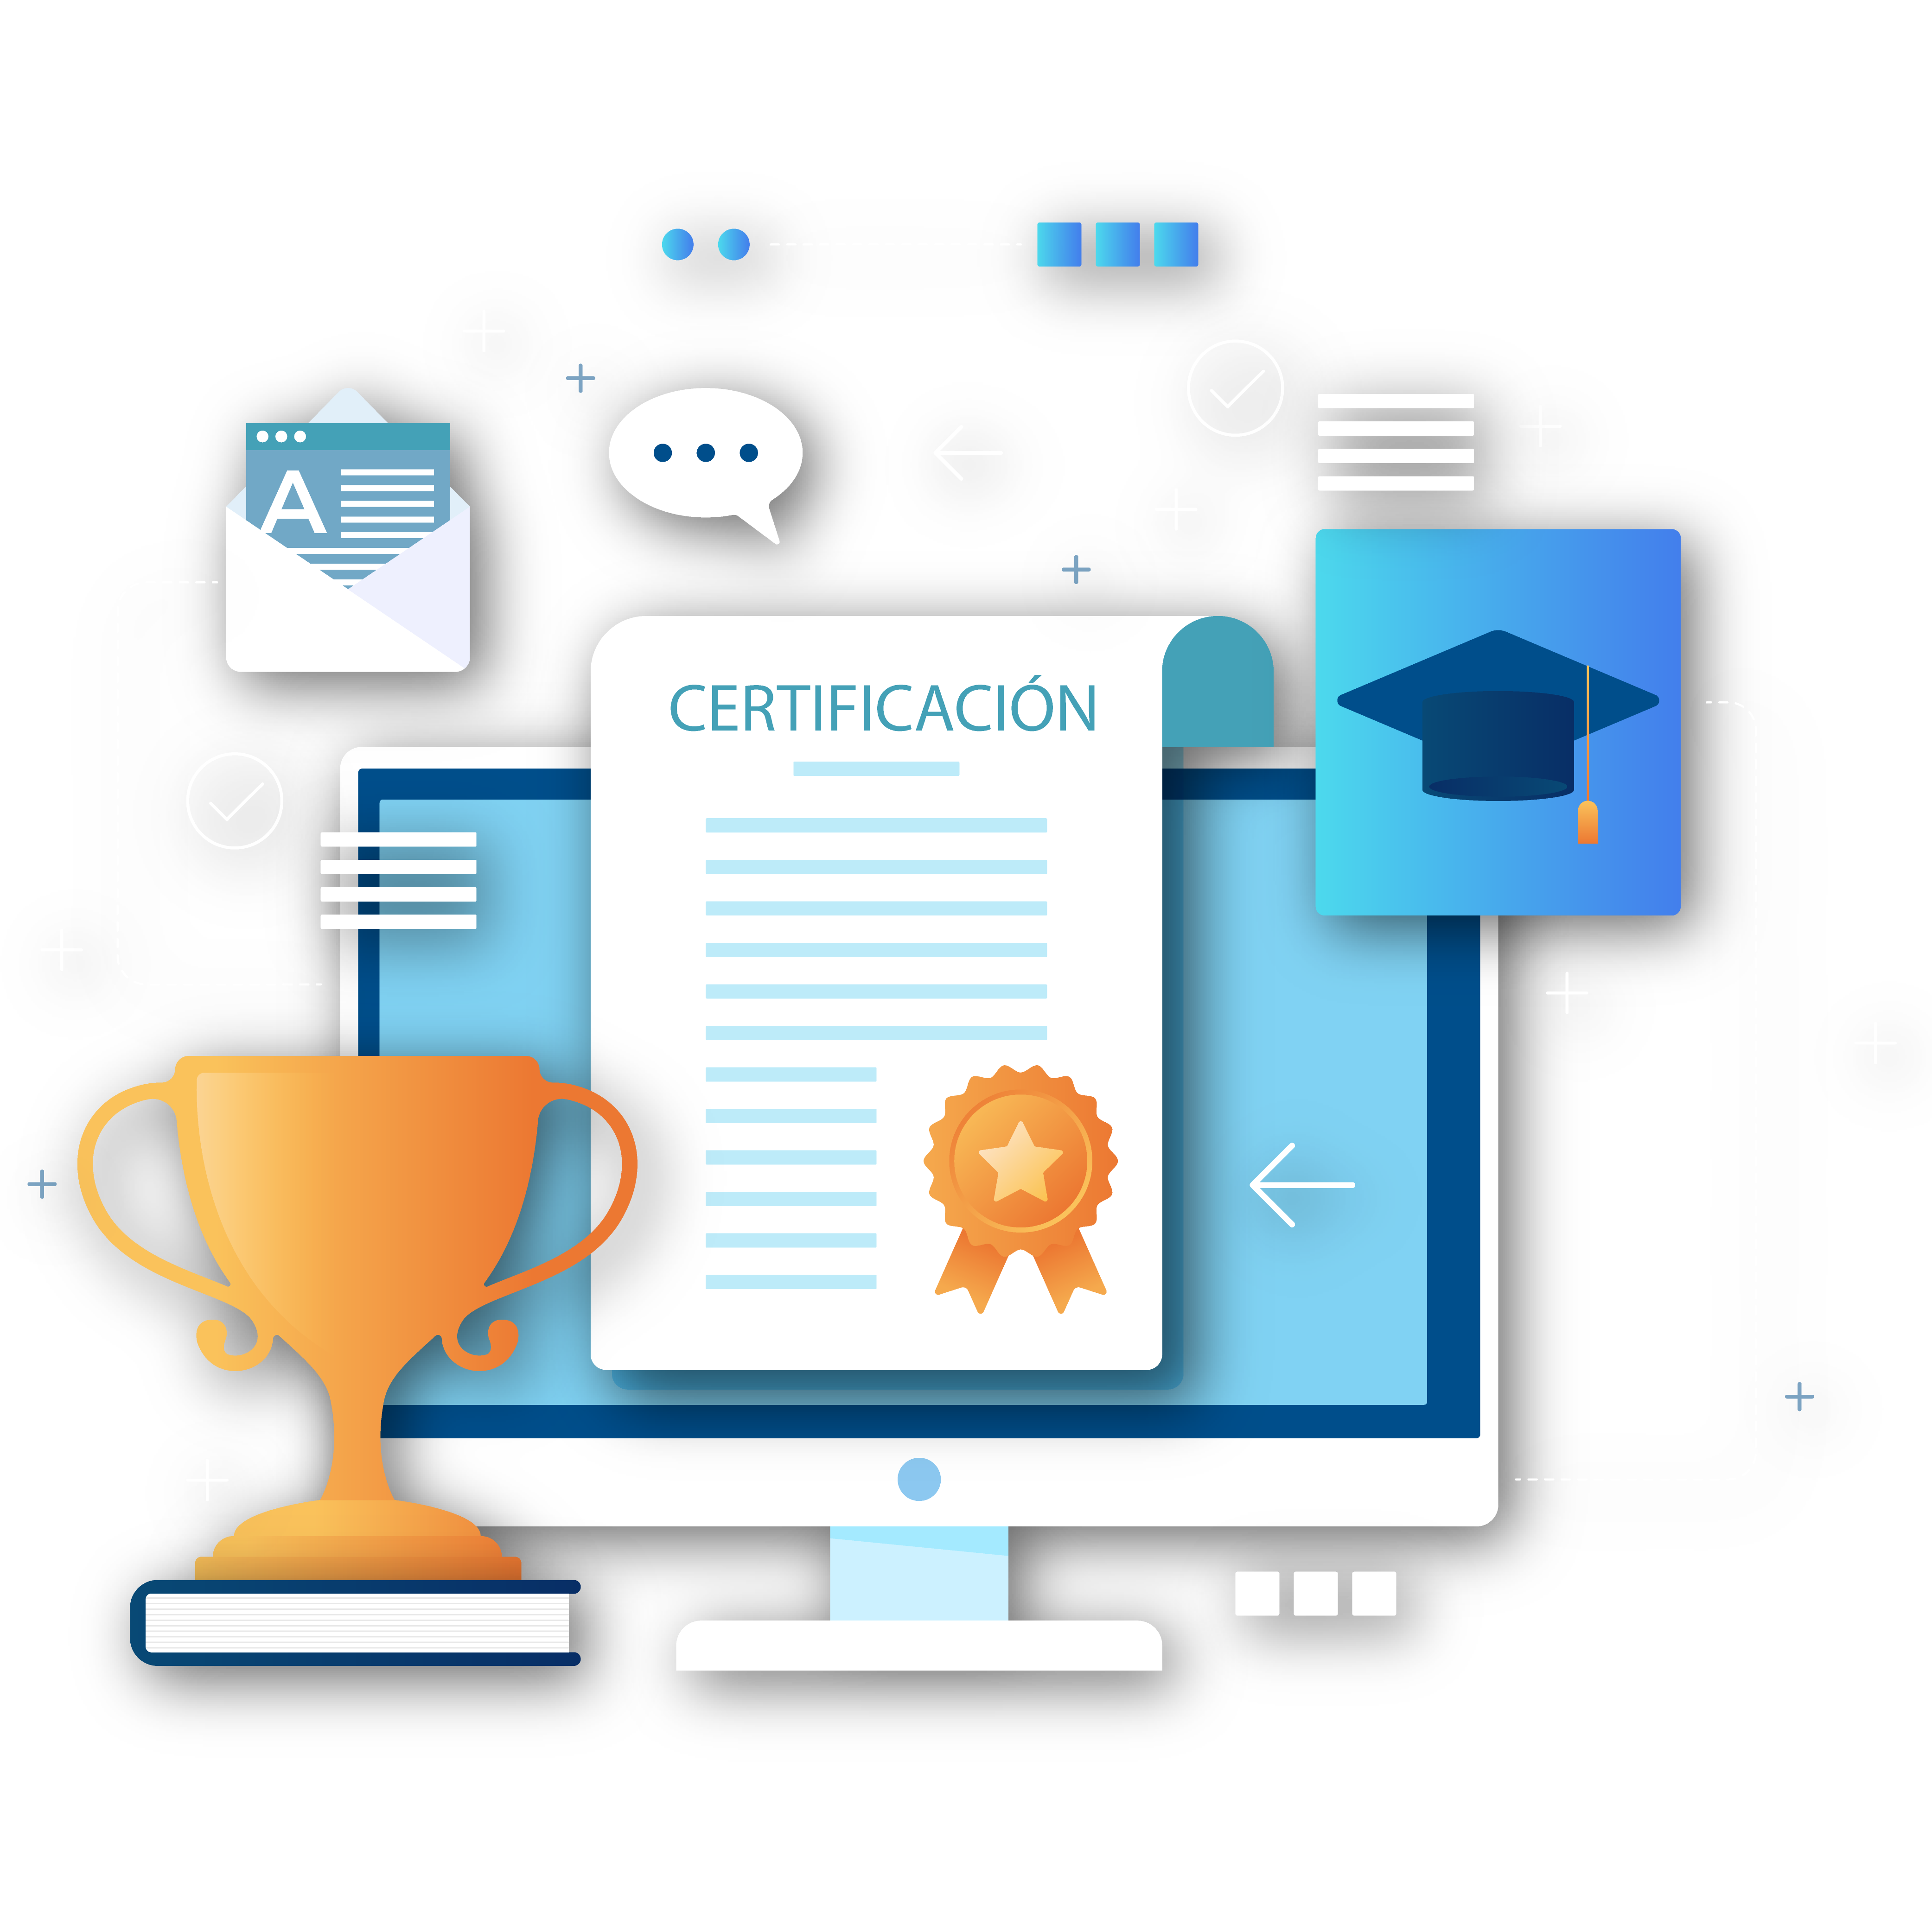 cursos seguros con certificación